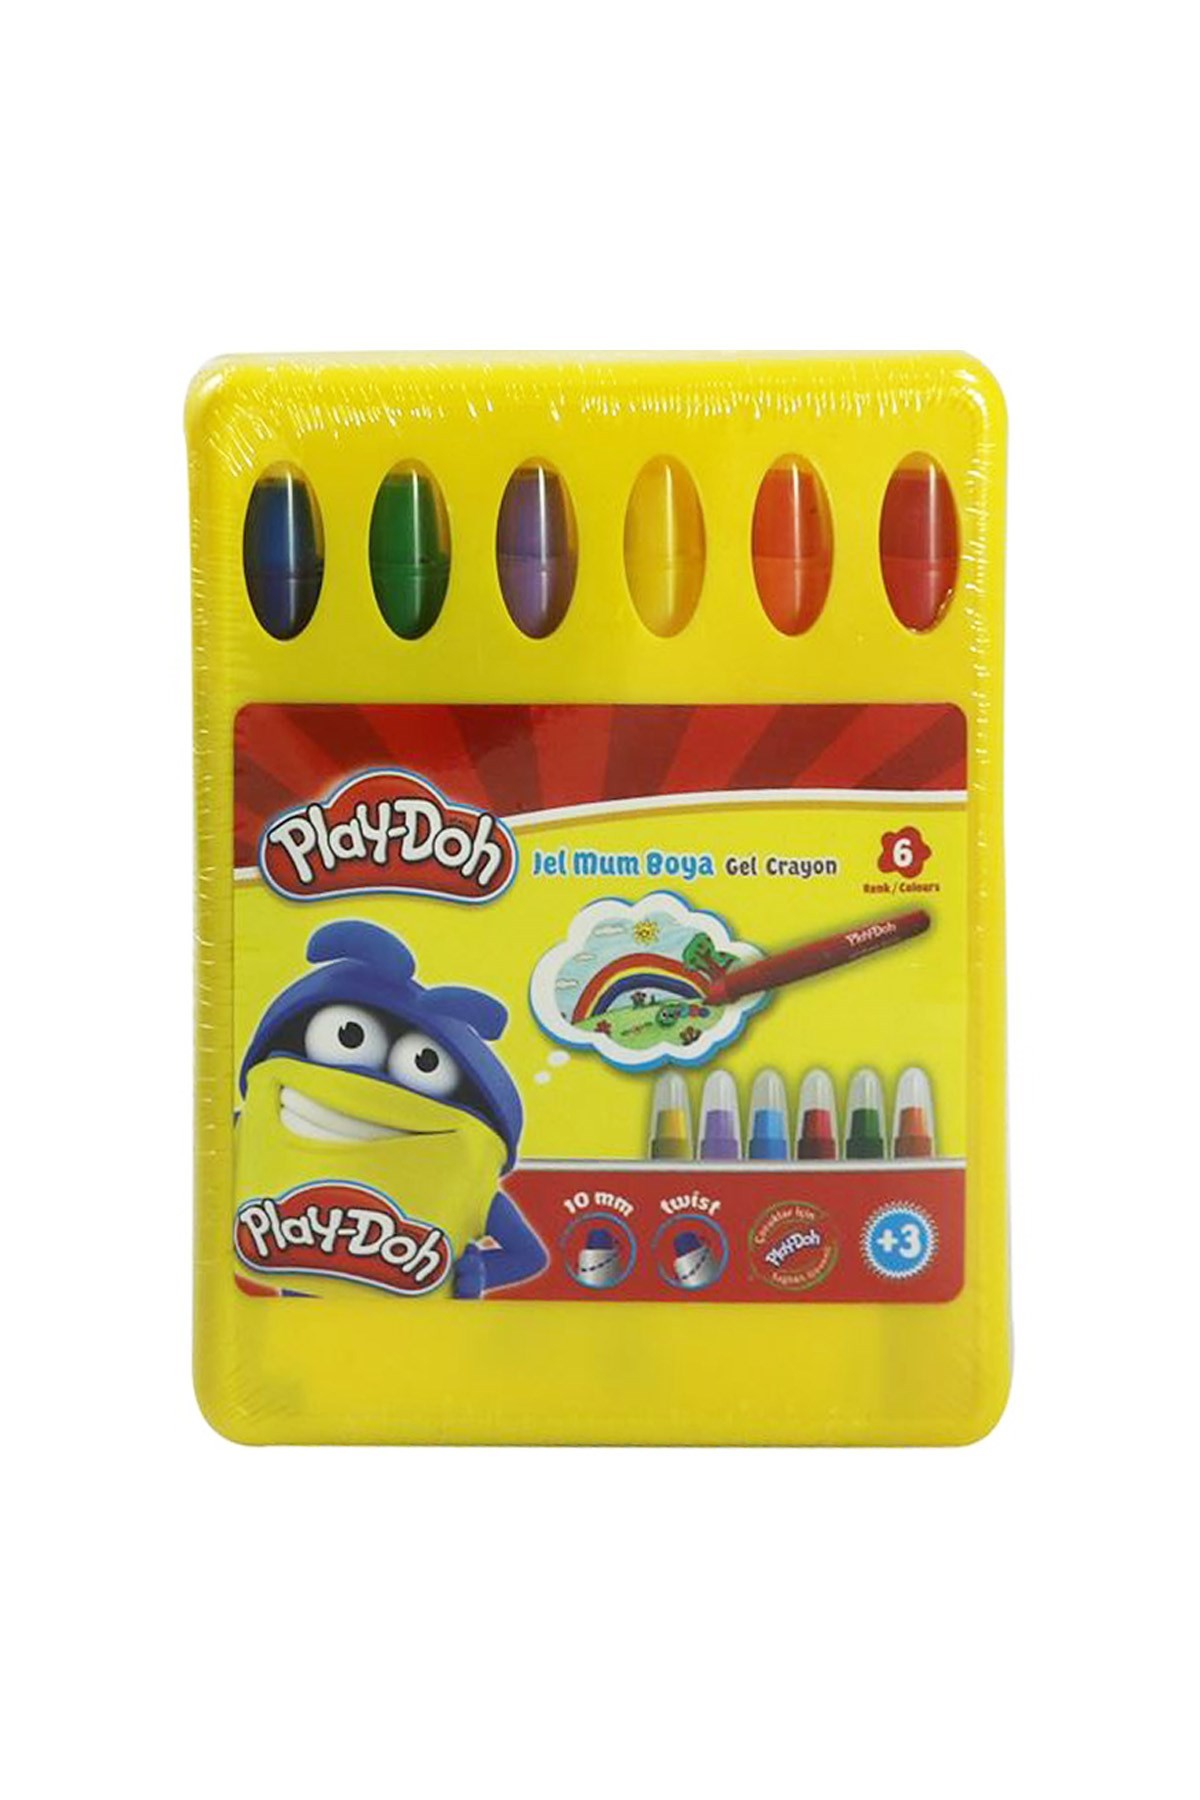 Play-Doh Crayon Jel Mum Boya 6 Renk